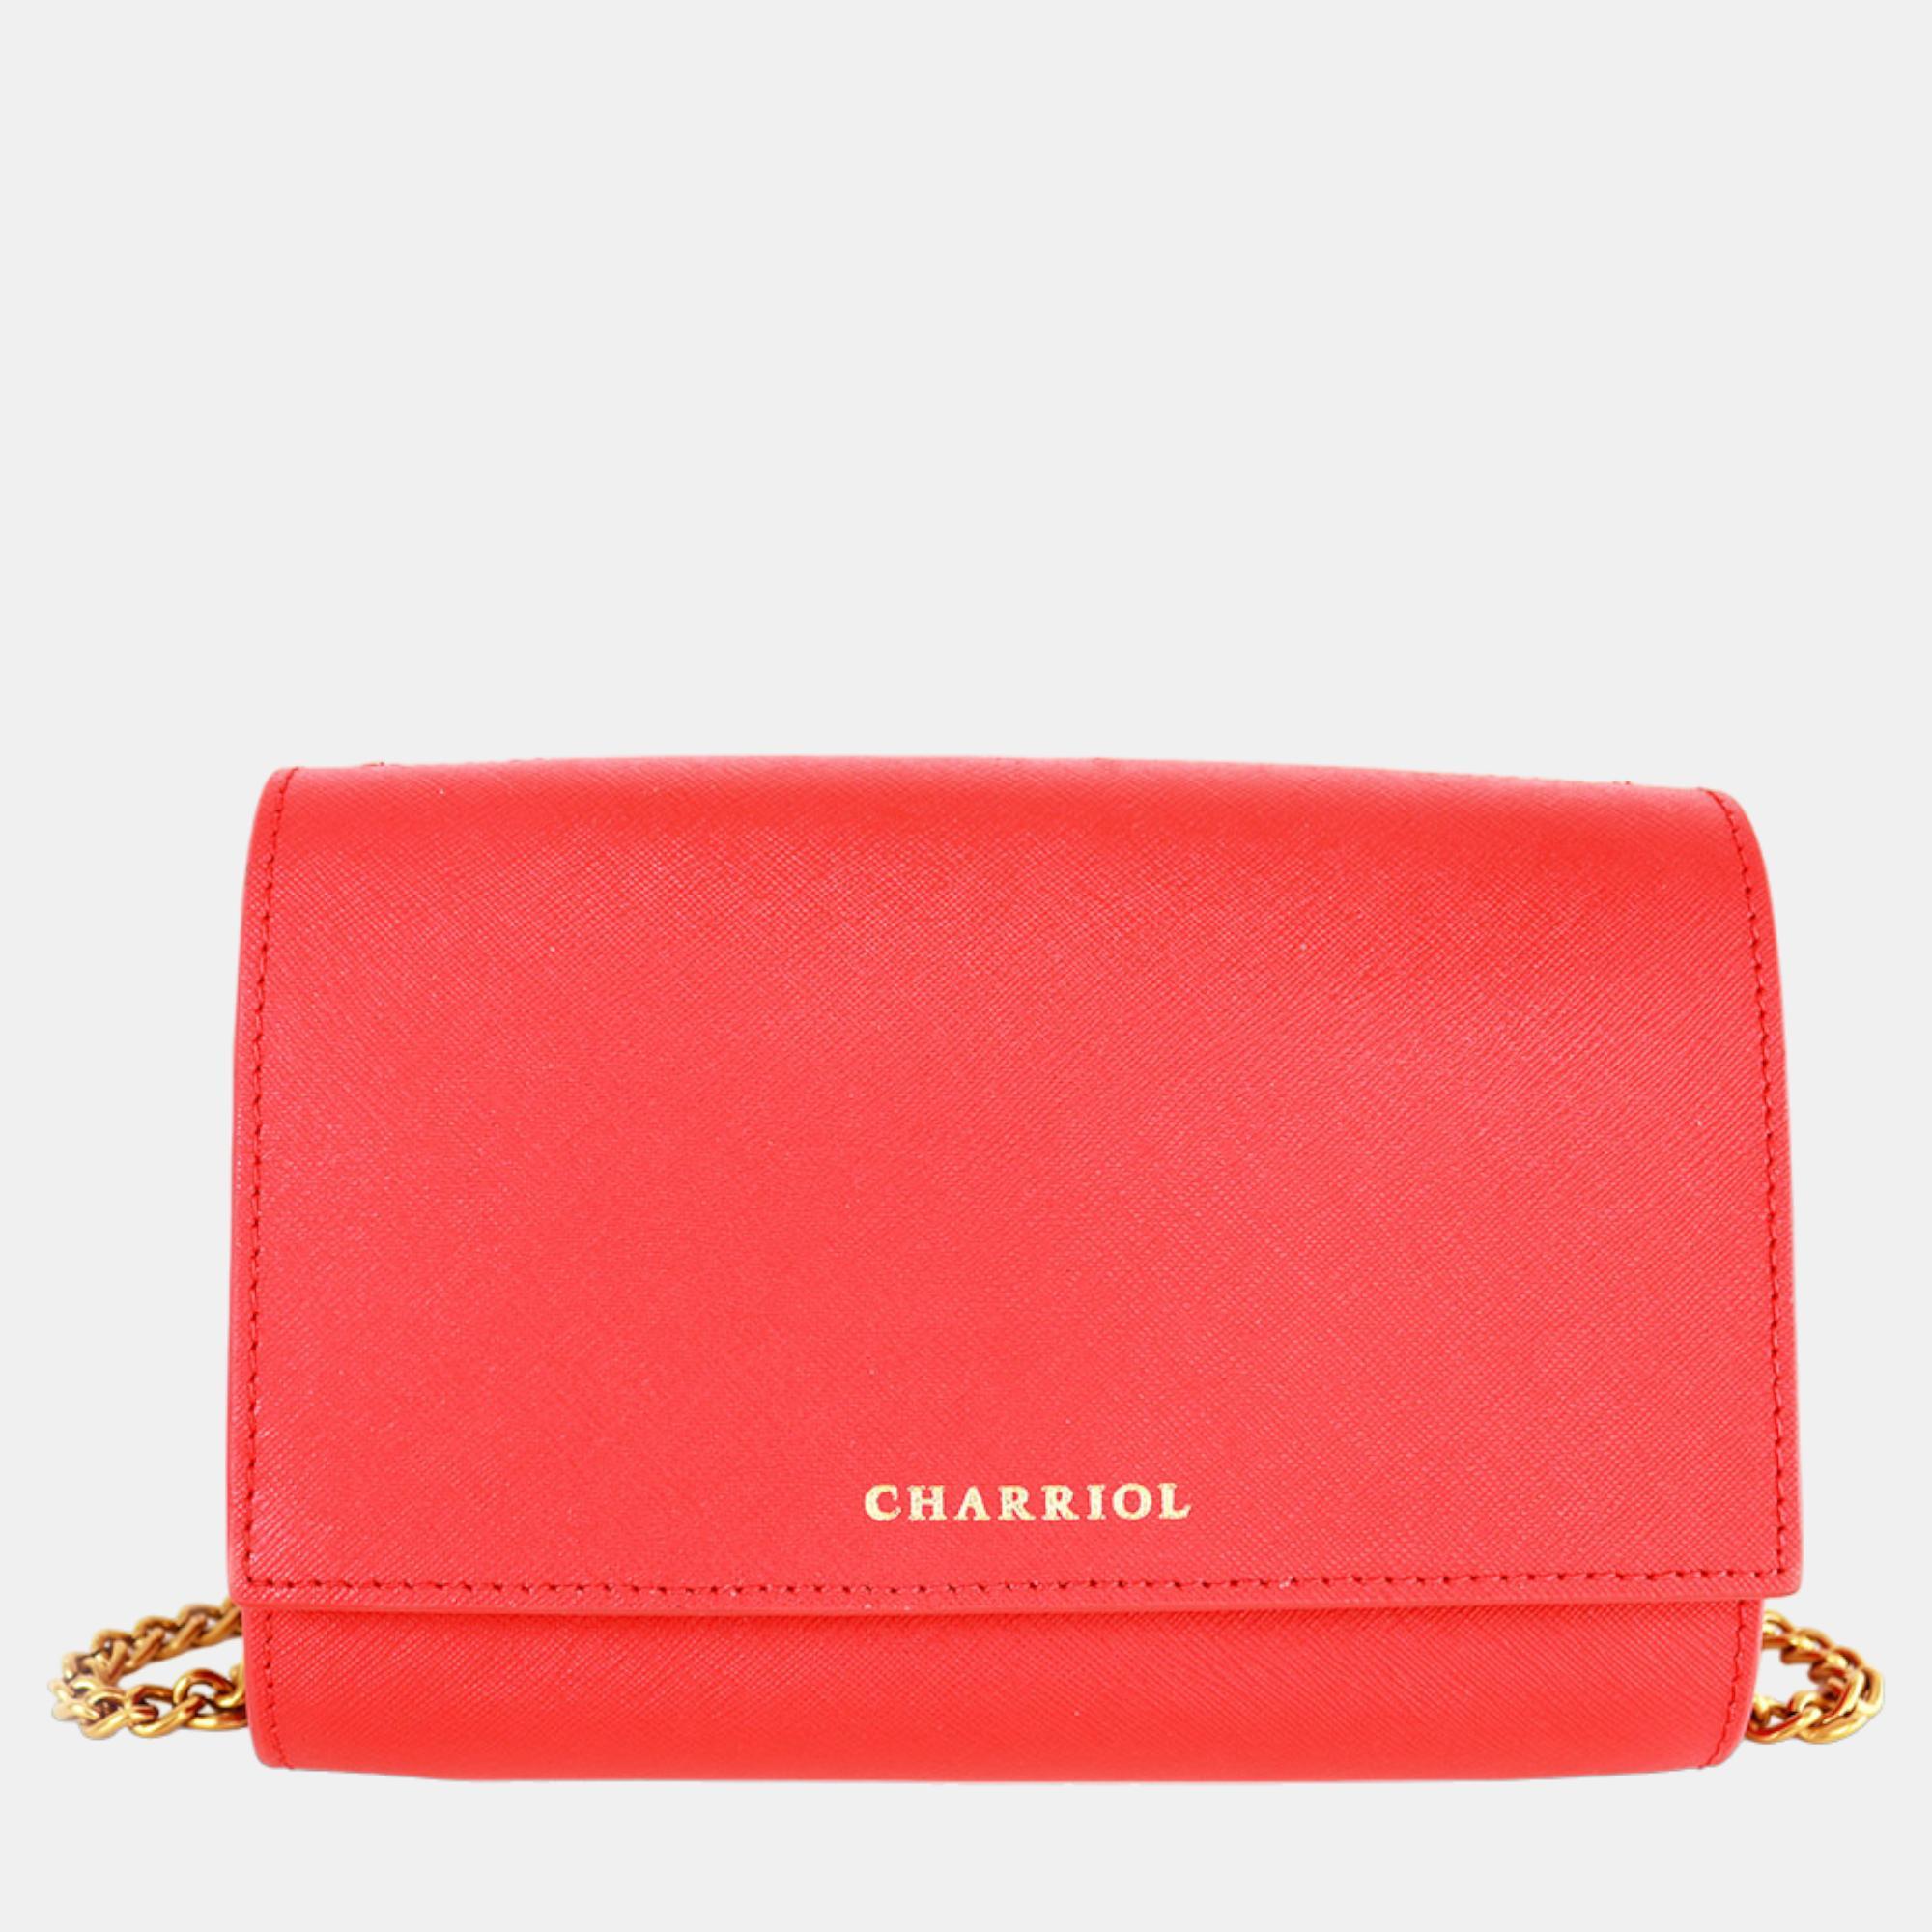 Charriol red leather chameleon crossbody